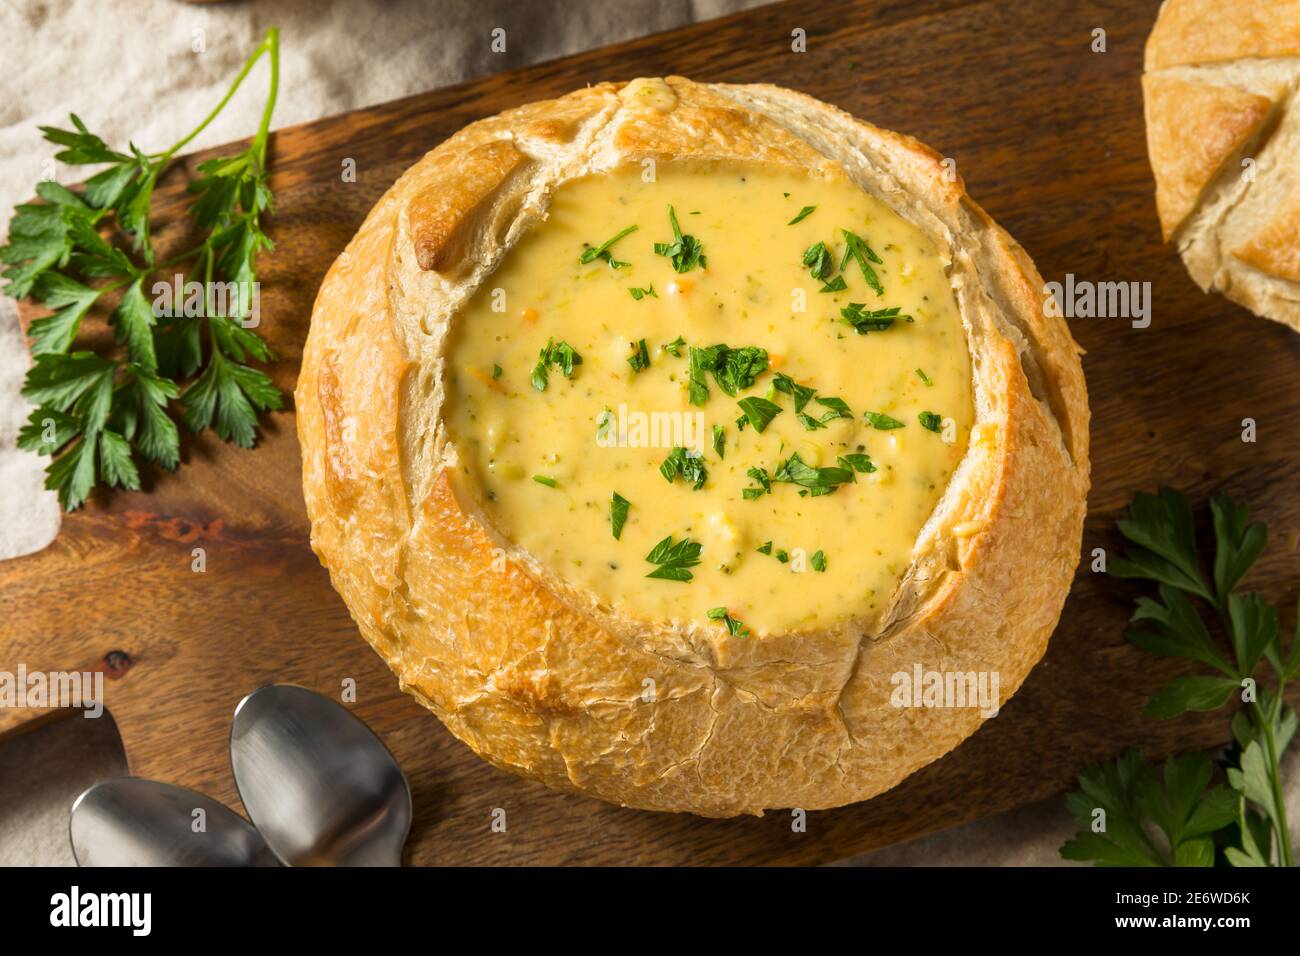 Homemade Sourdough Bread Bowls and Broccoli Cheese Soup